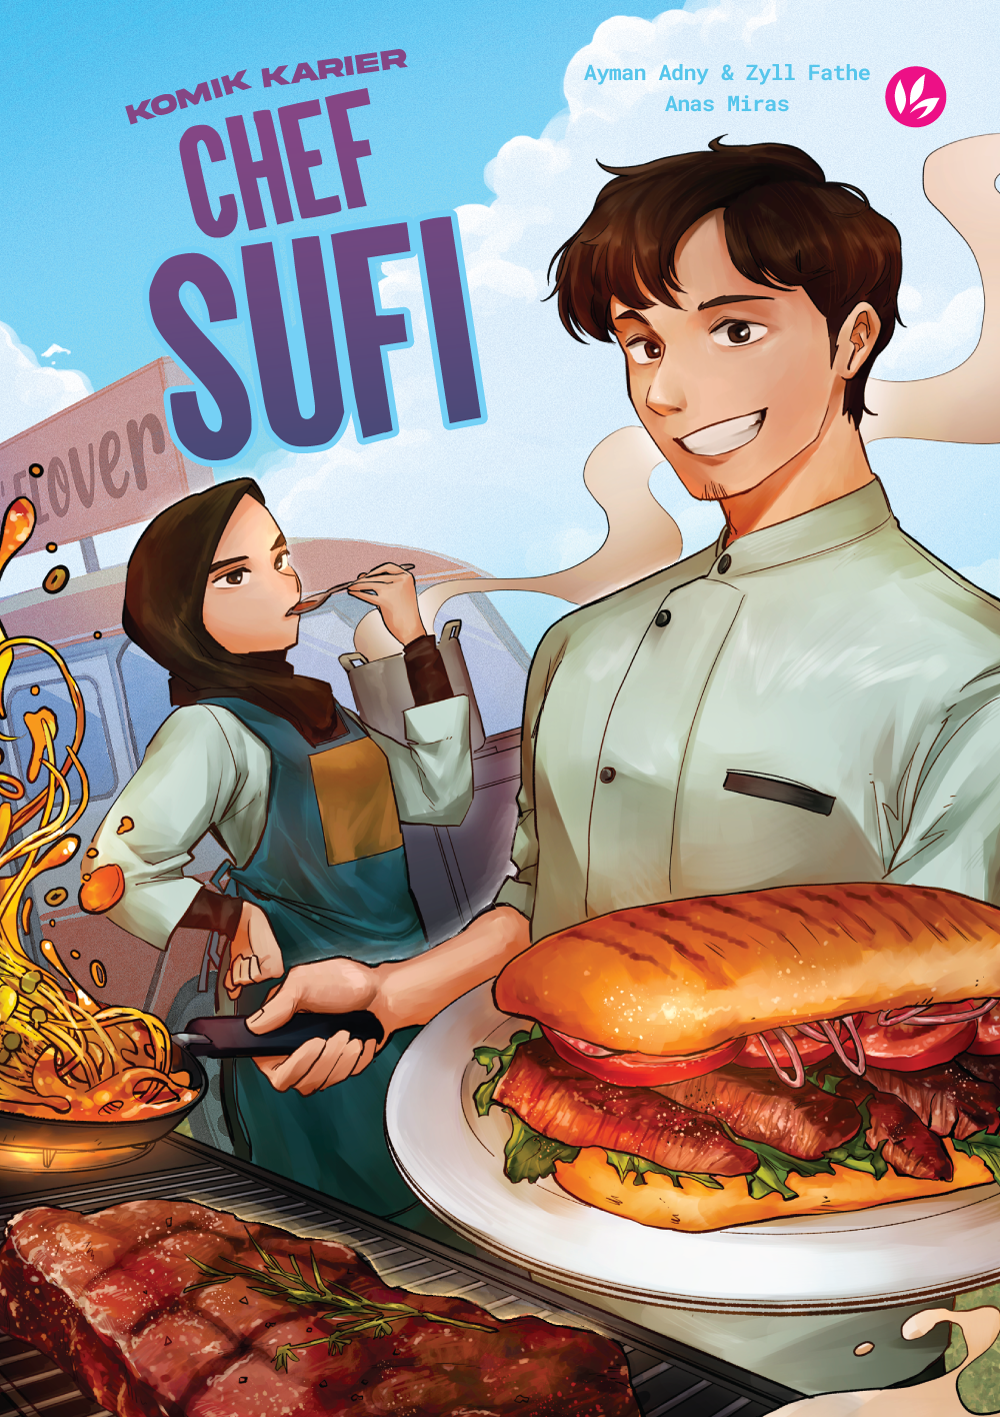 Iman Publication Buku Komik Karier: Chef Sufi by Anas Miras, Ayman Adny & Zyll Fathe 201616